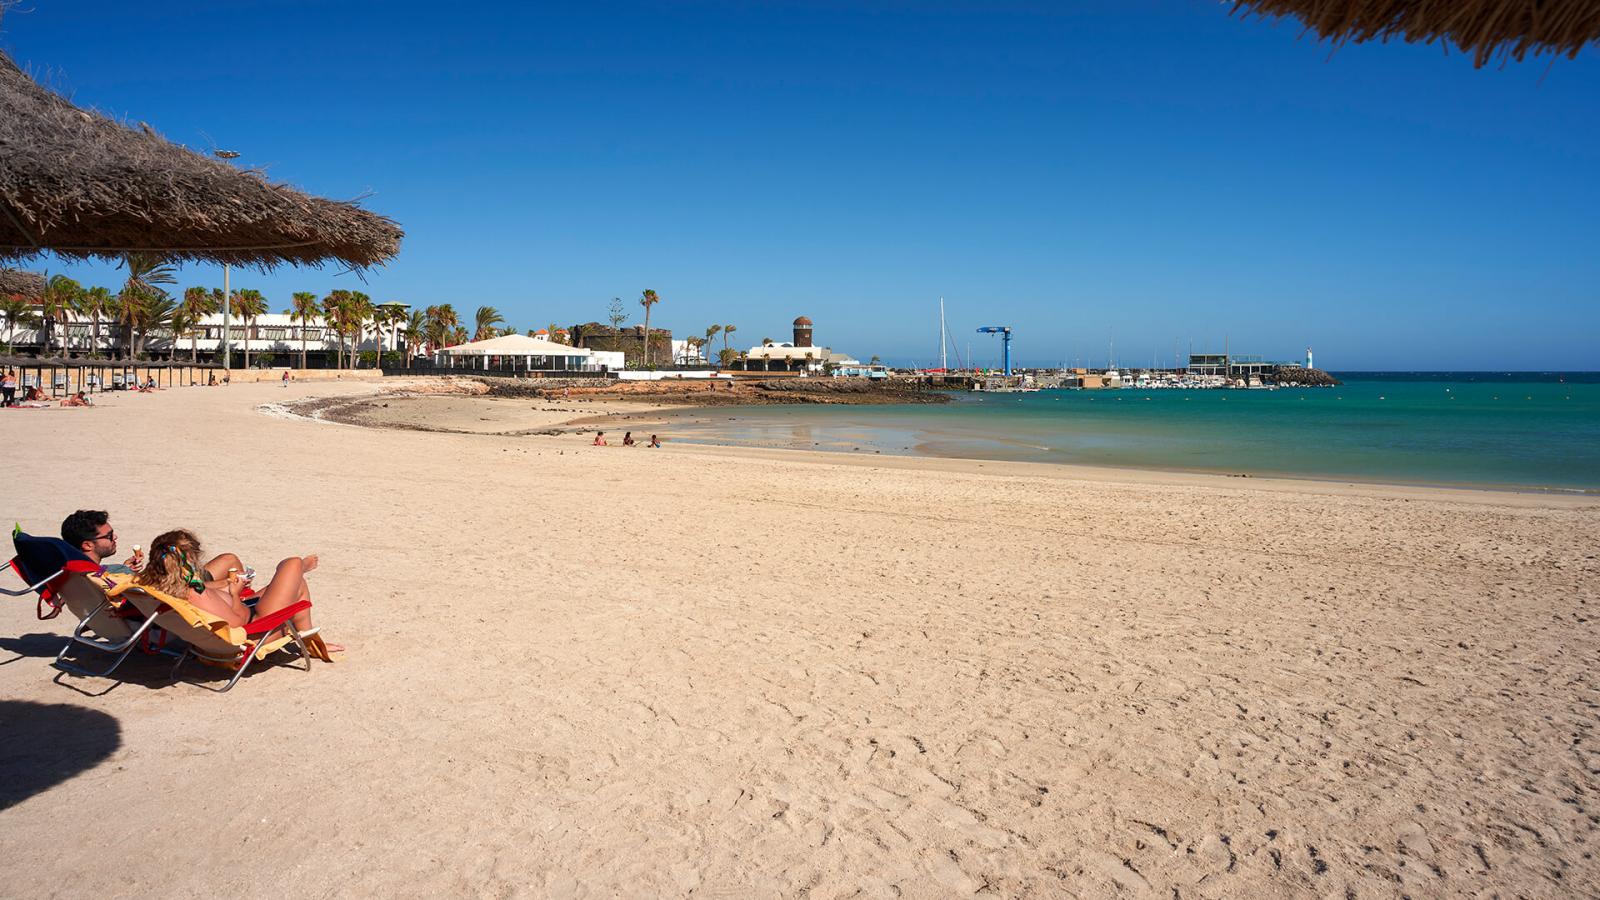 Post-impressionism dish debt El Castillo beach | Hello Canary Islands